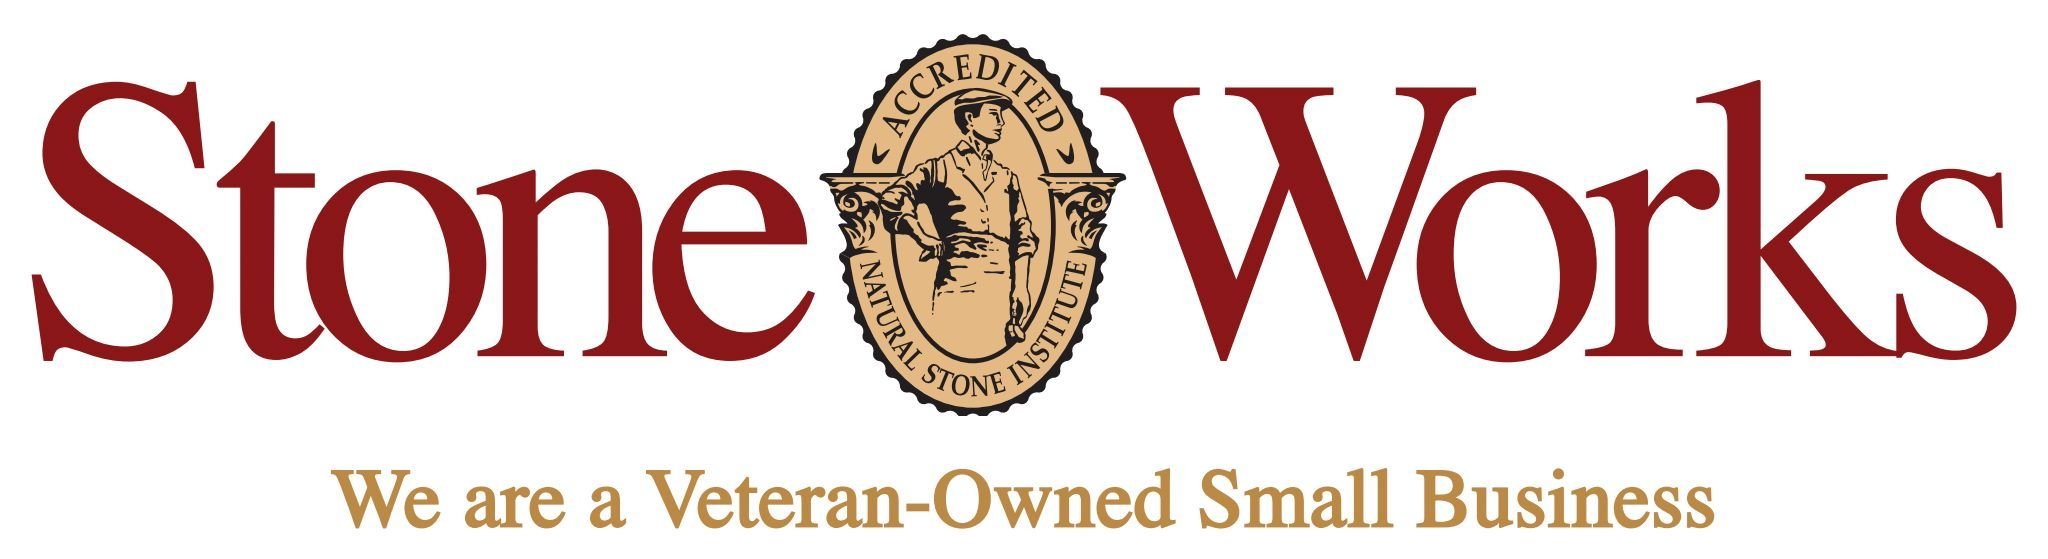 StoneWorks logo - Veteran Owned